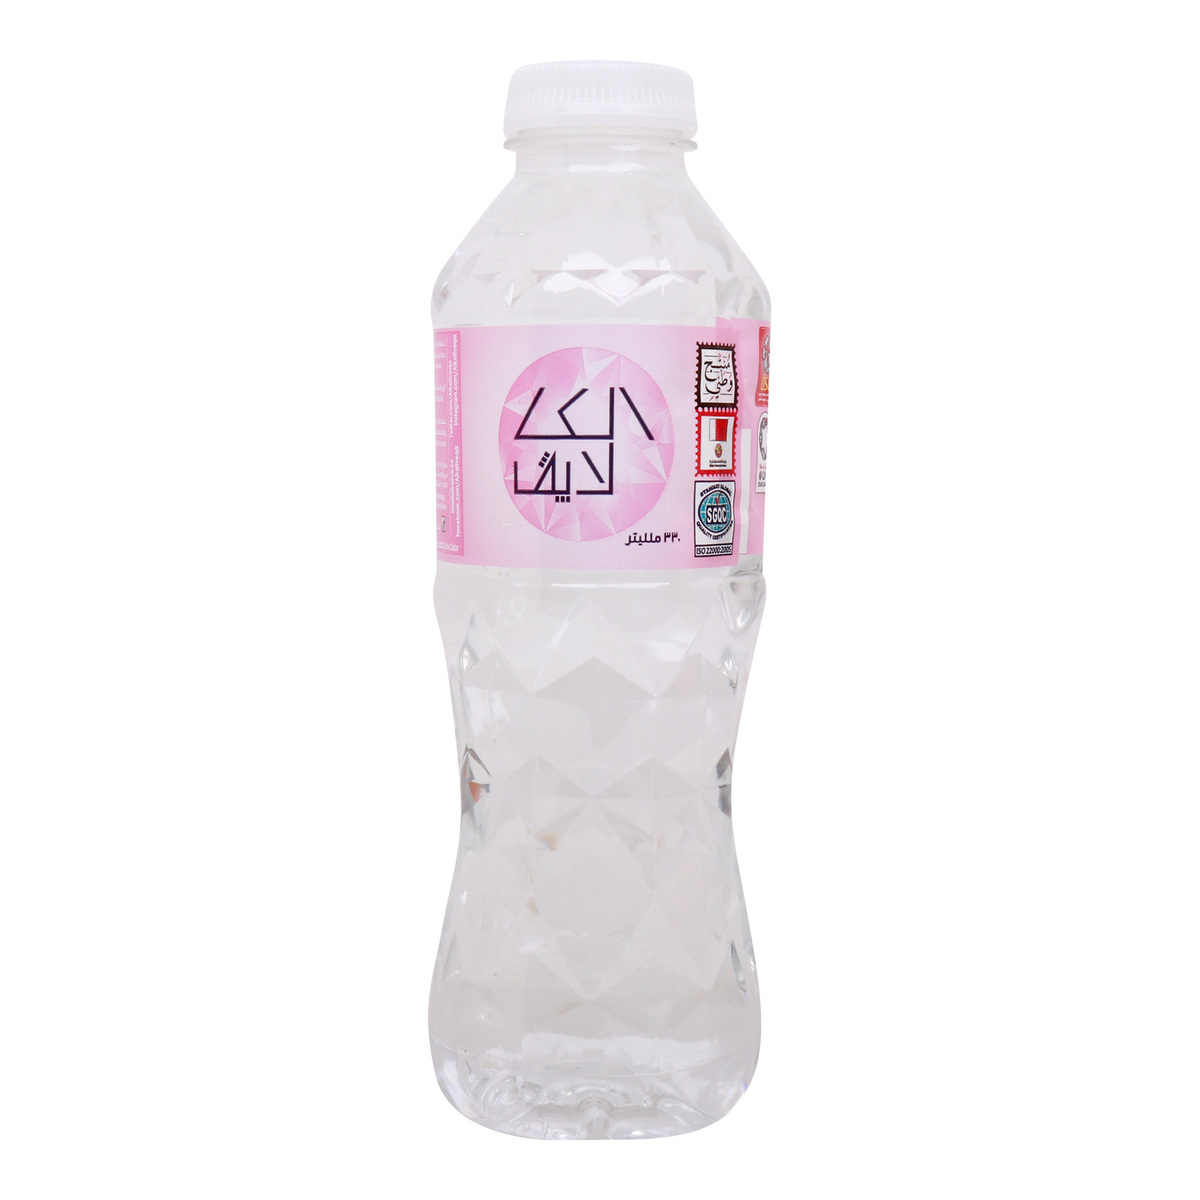 Alkalive Baby Water, 330 ml